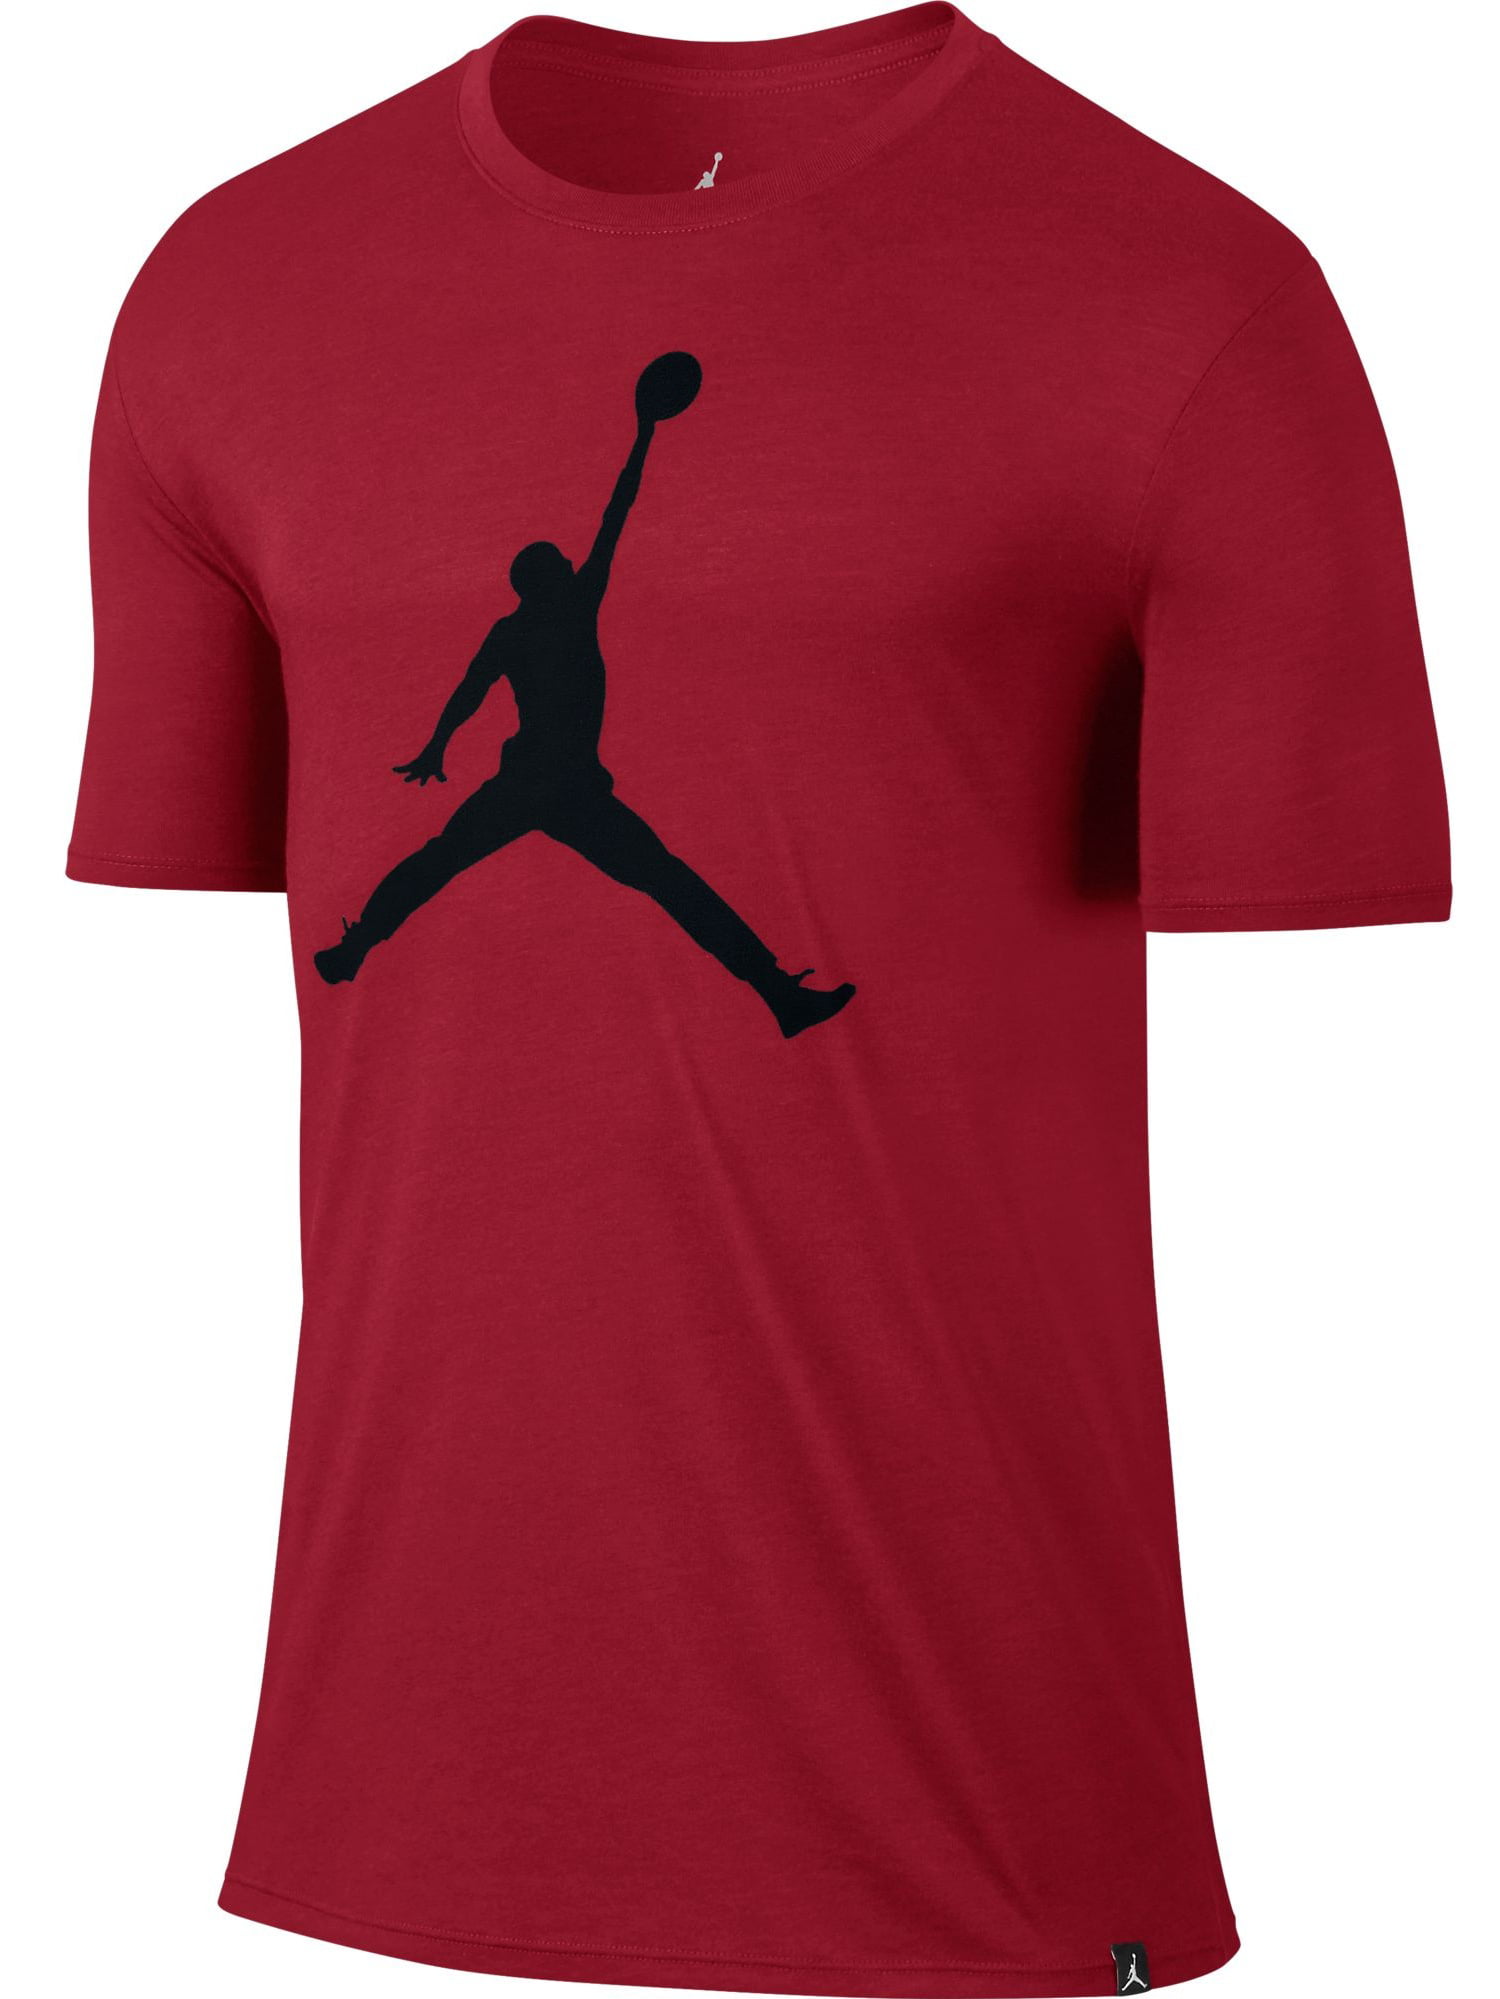 Jordan - Jordan Iconic Jumpman Logo Men's T-Shirt Red/Black 834473-687 ...